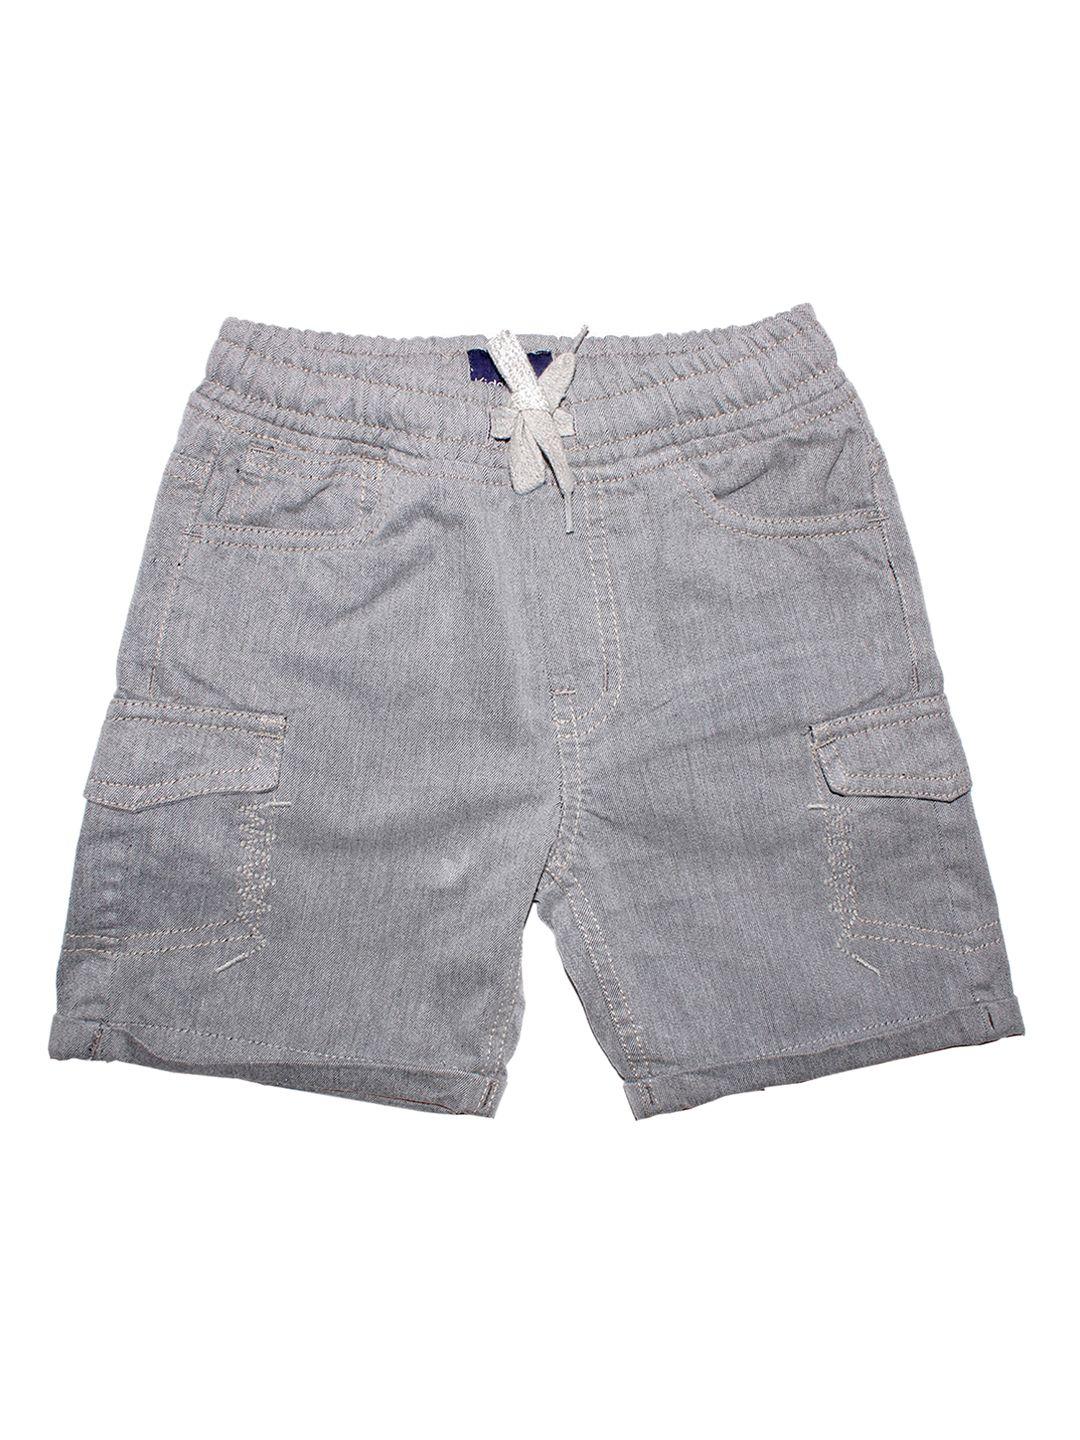 kiddopanti boys grey self design regular fit shorts